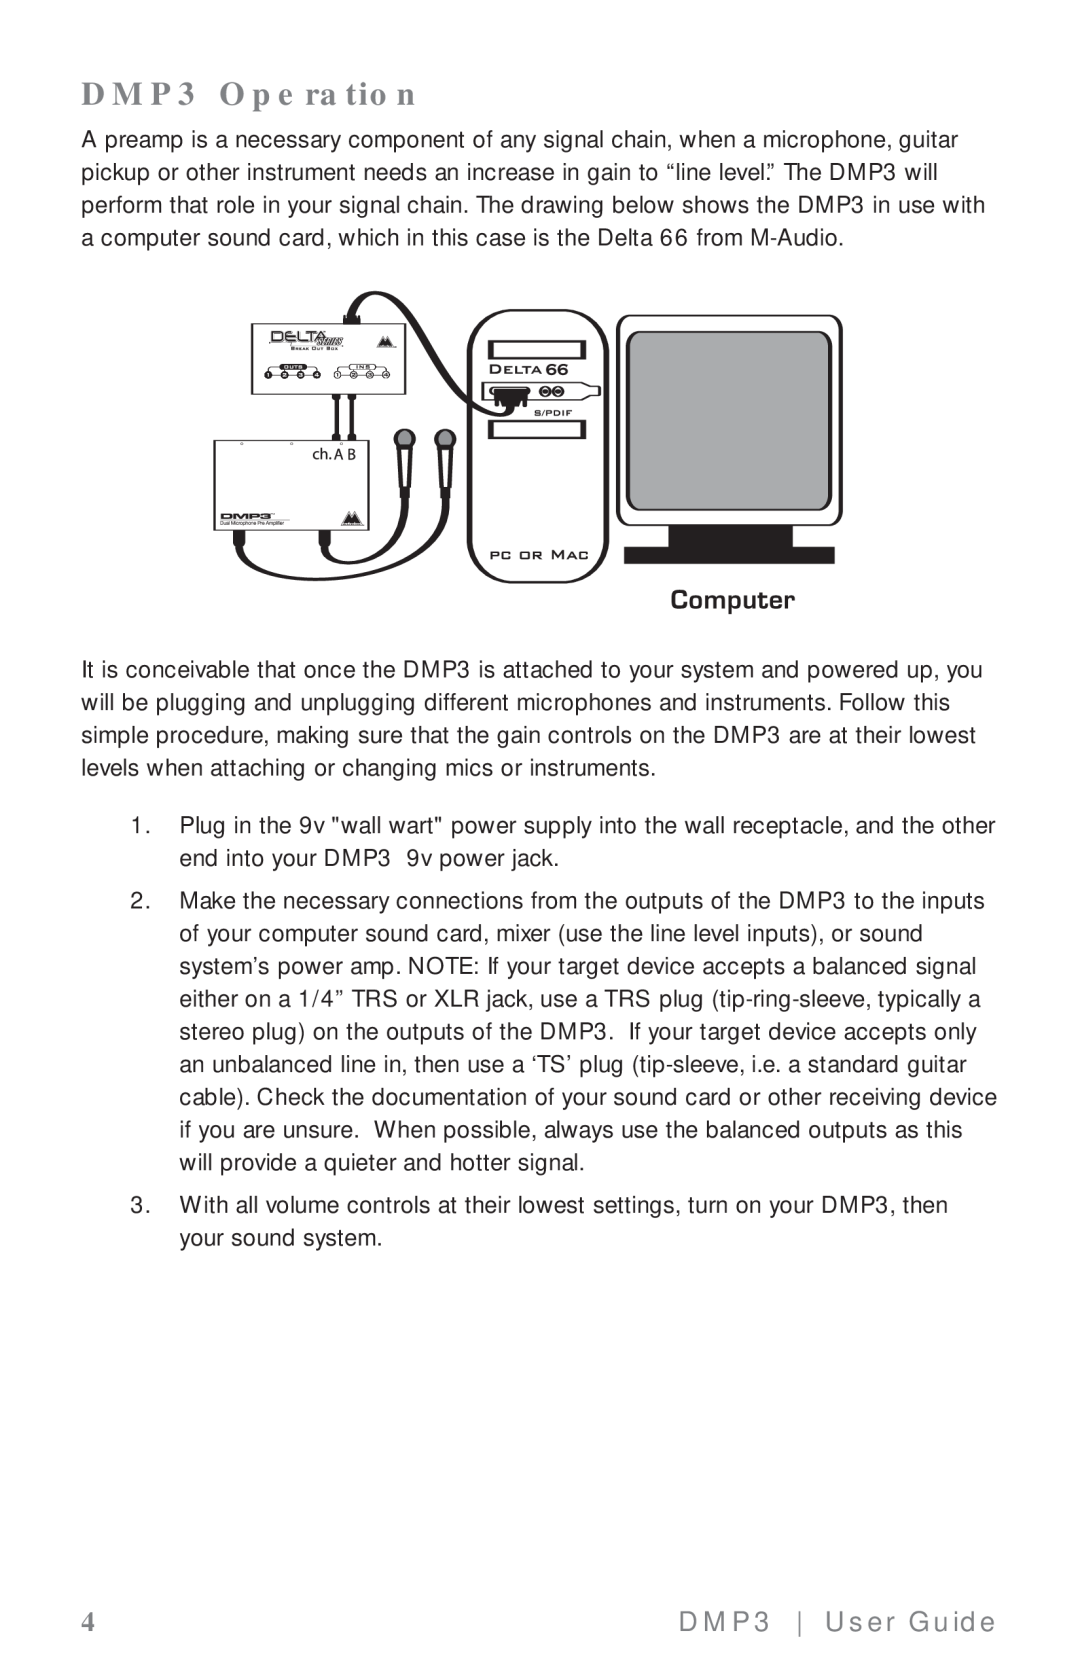 M-Audio manual DMP3 Operation, DMP3 User Guide 